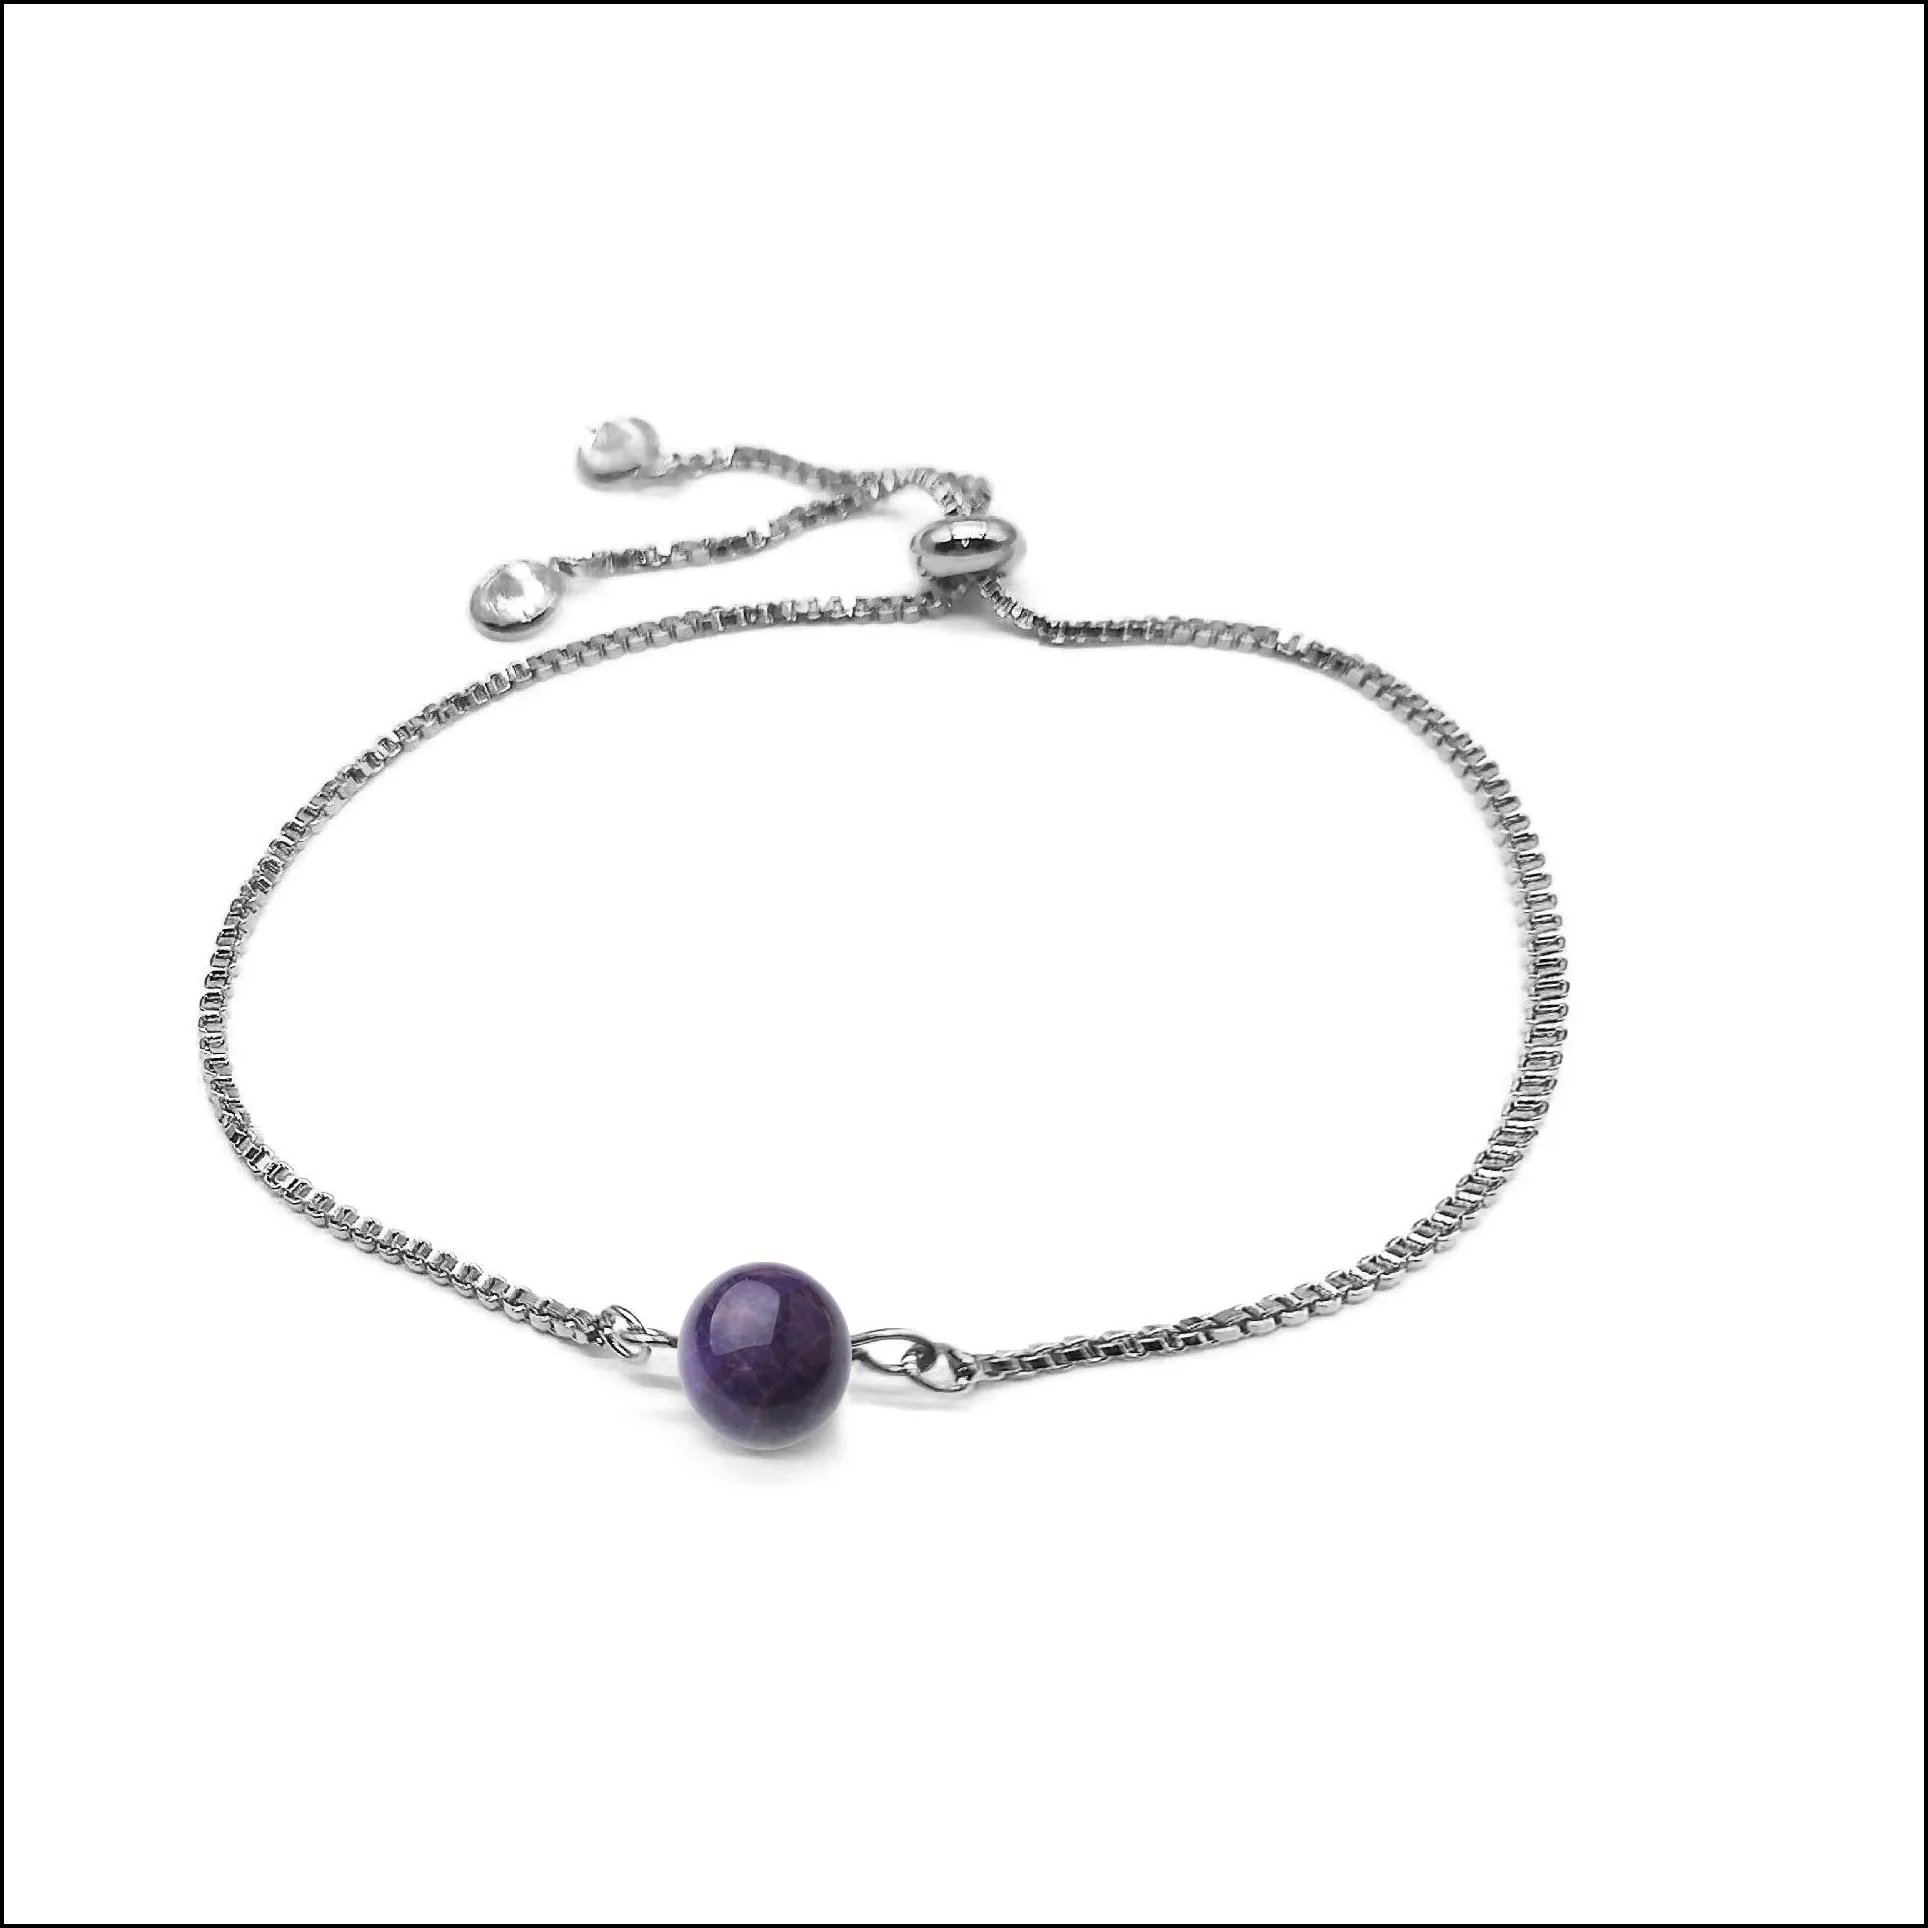 healing crystal tenns bracelet wristbands 8mm stone beads chakra gemstone cuff bangle anklet jewelry adjustable for men women teen